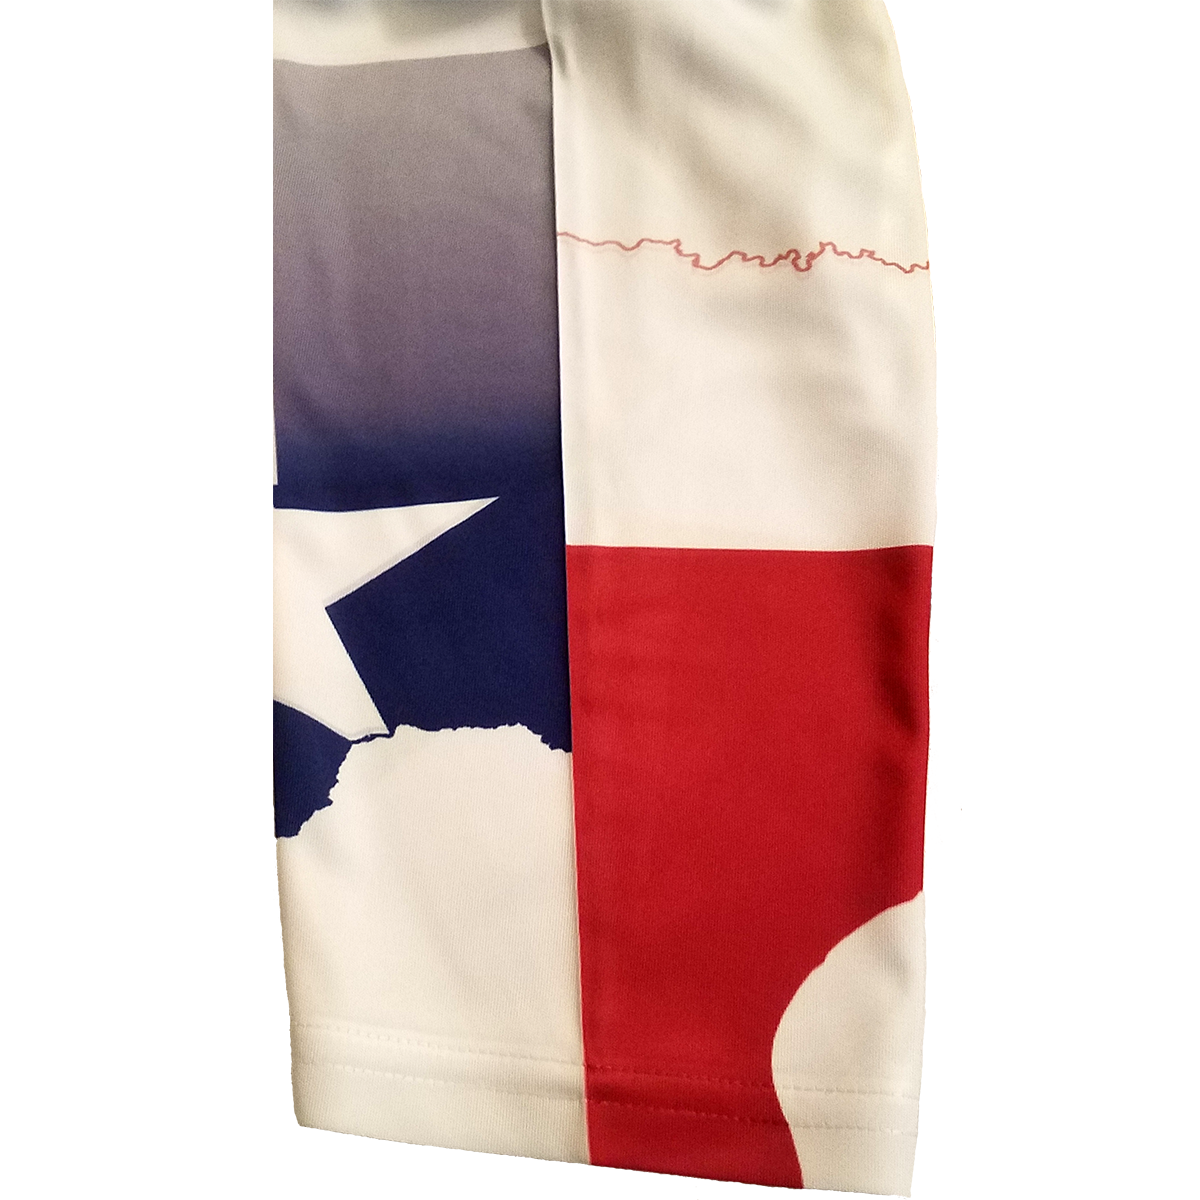 Fishing Shirt Poling Skiff Texas State Flag with Optional Flag Sleeve - Skiff Life